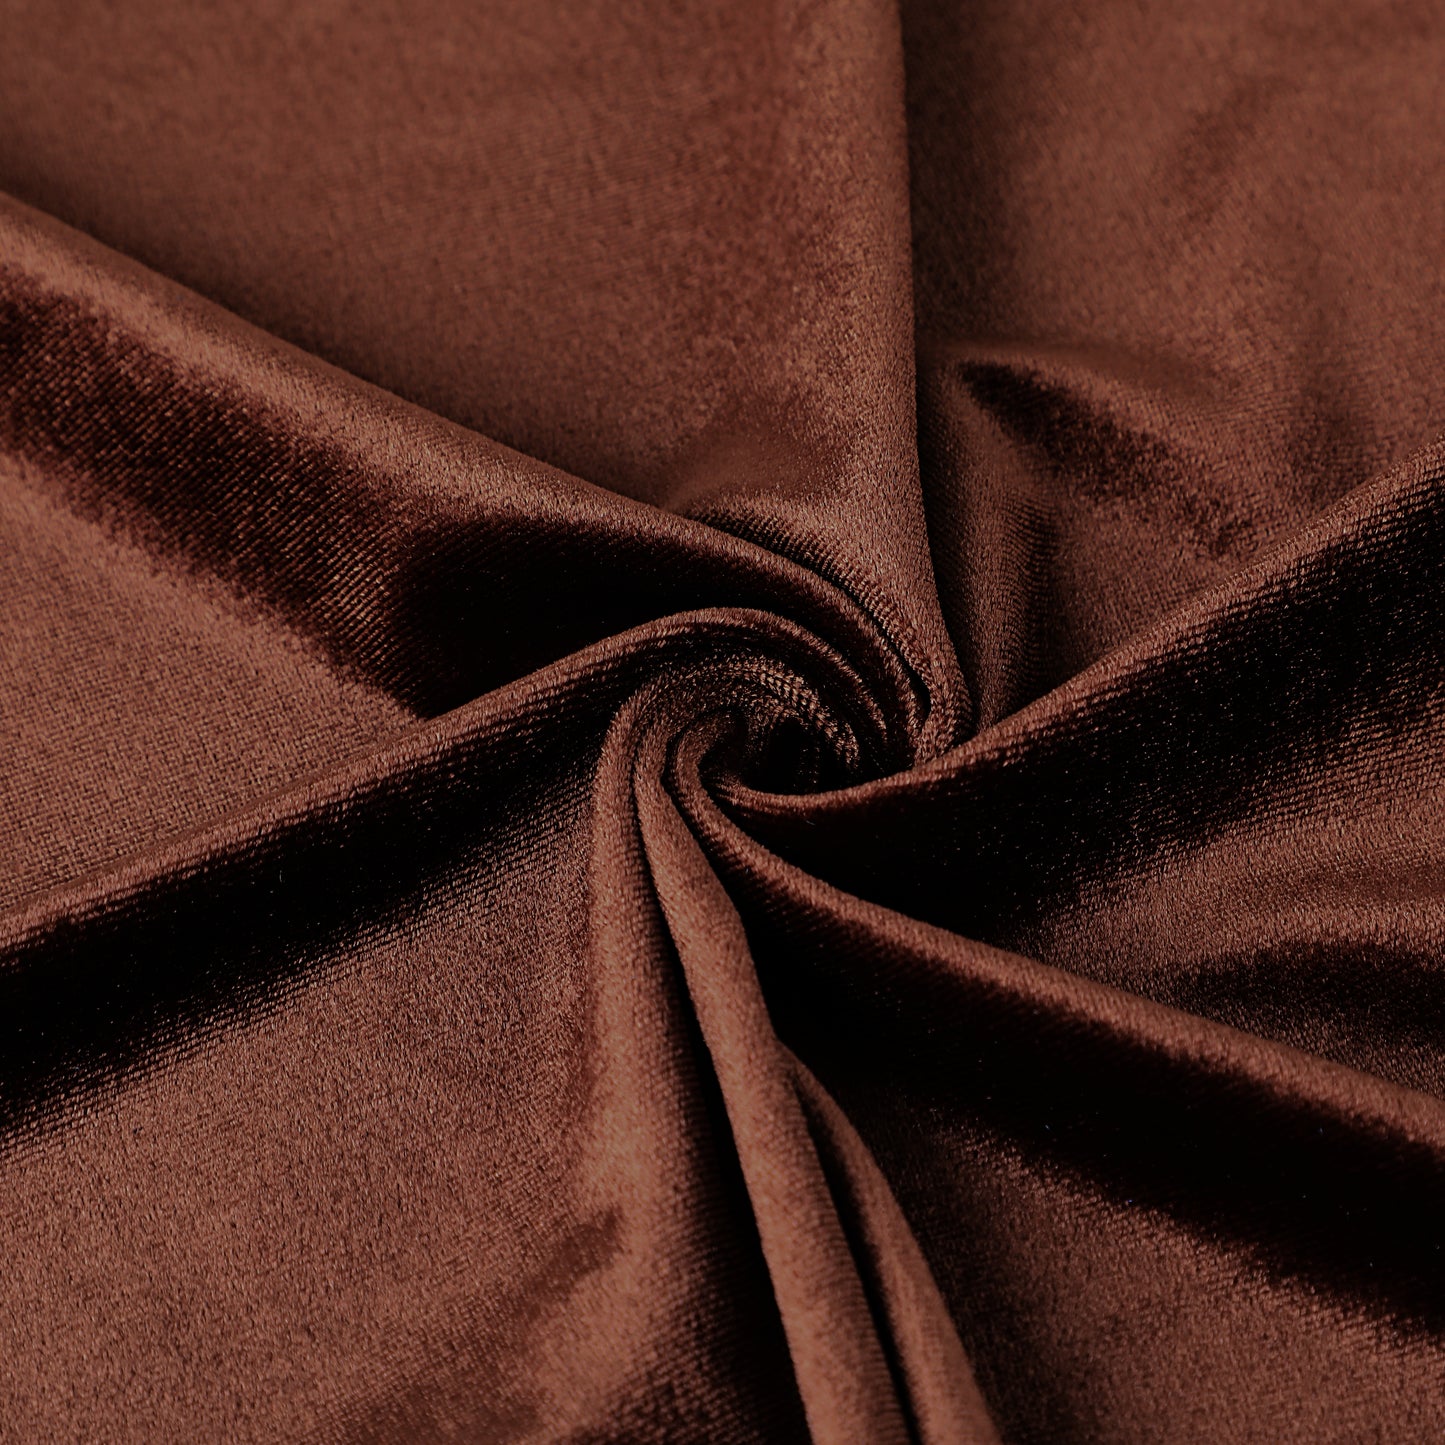 Brown Stretchy Velvet Fabric